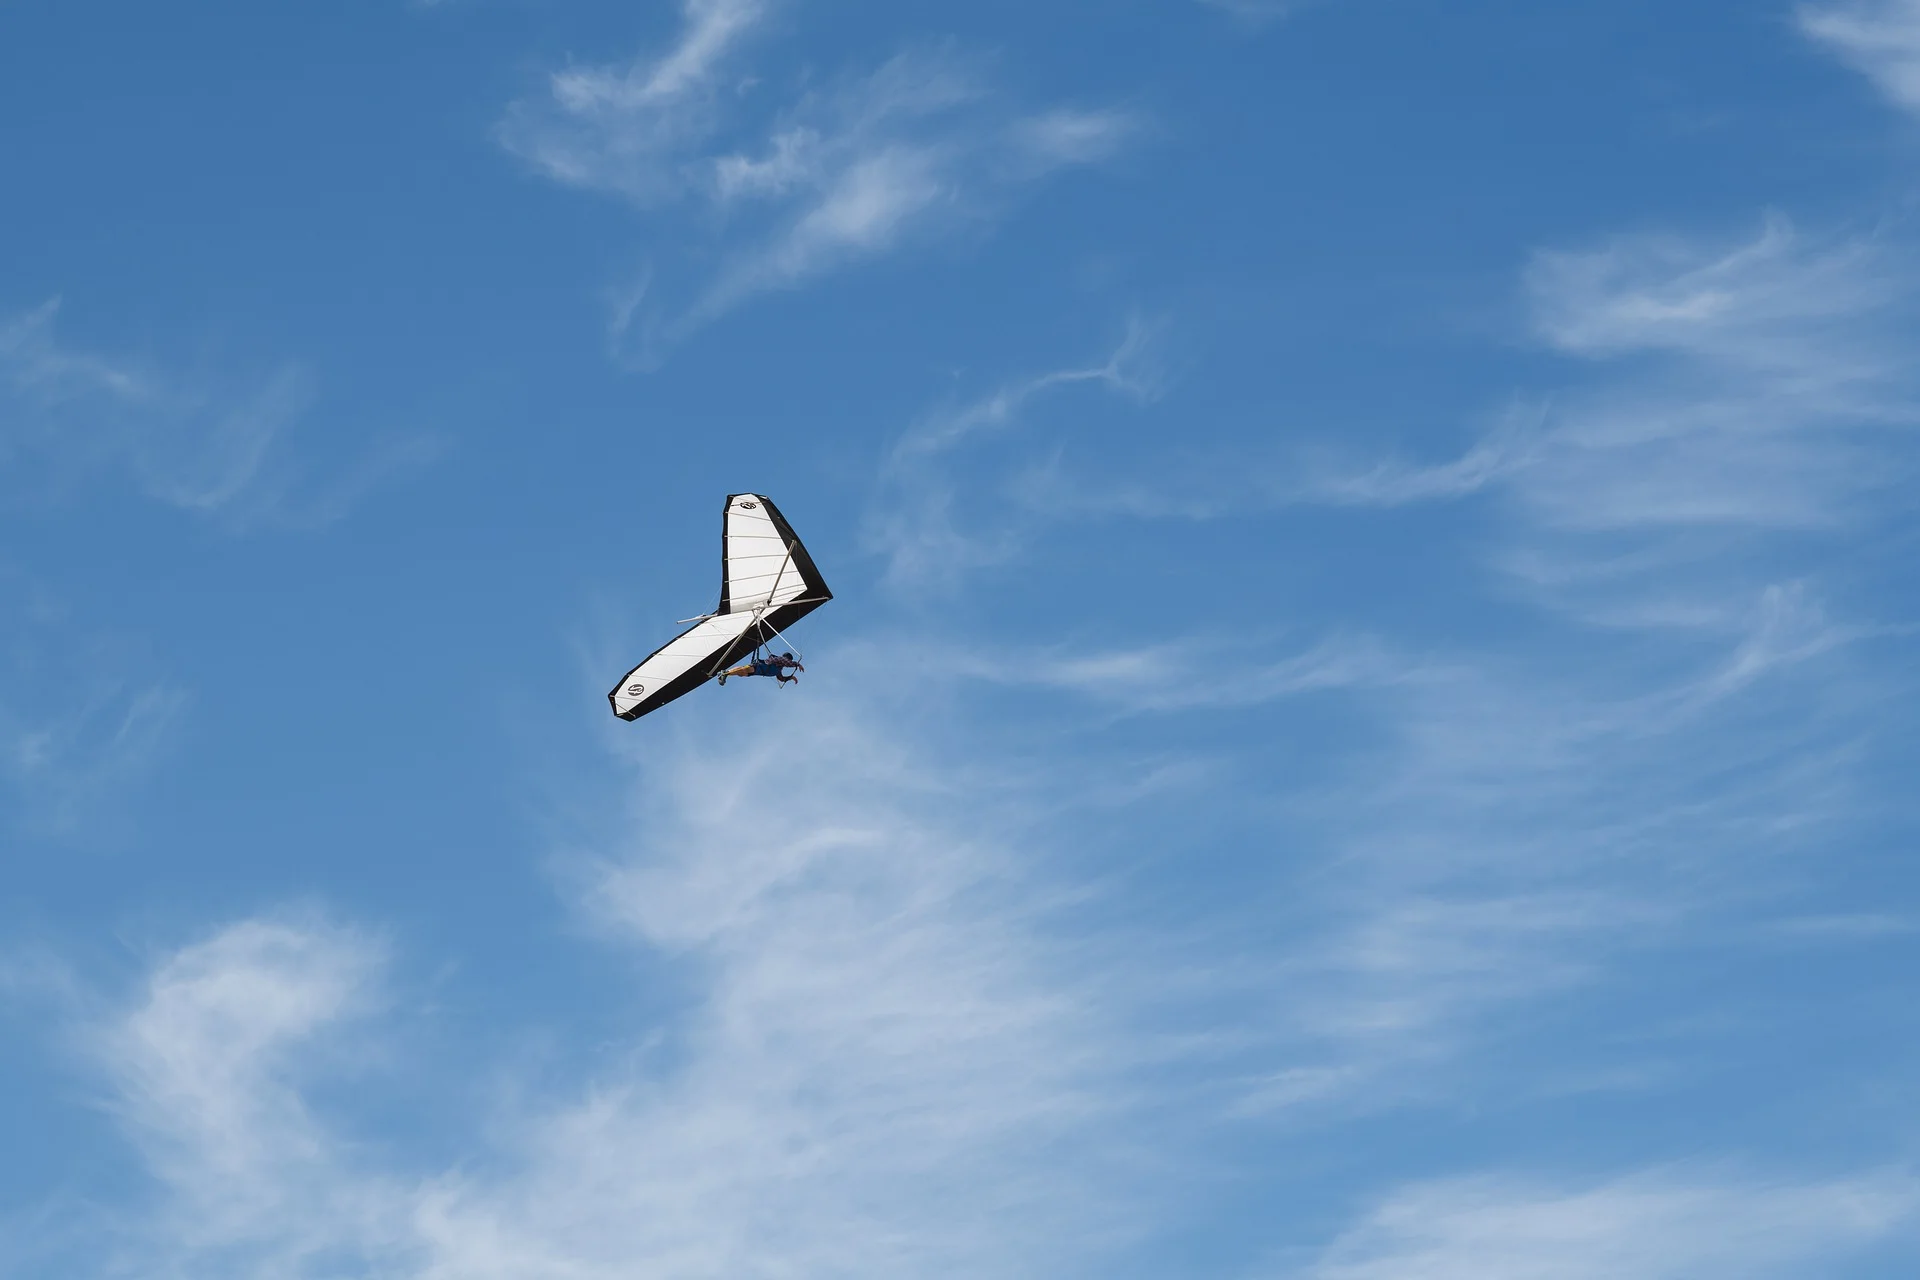 hang glider soaring through the air